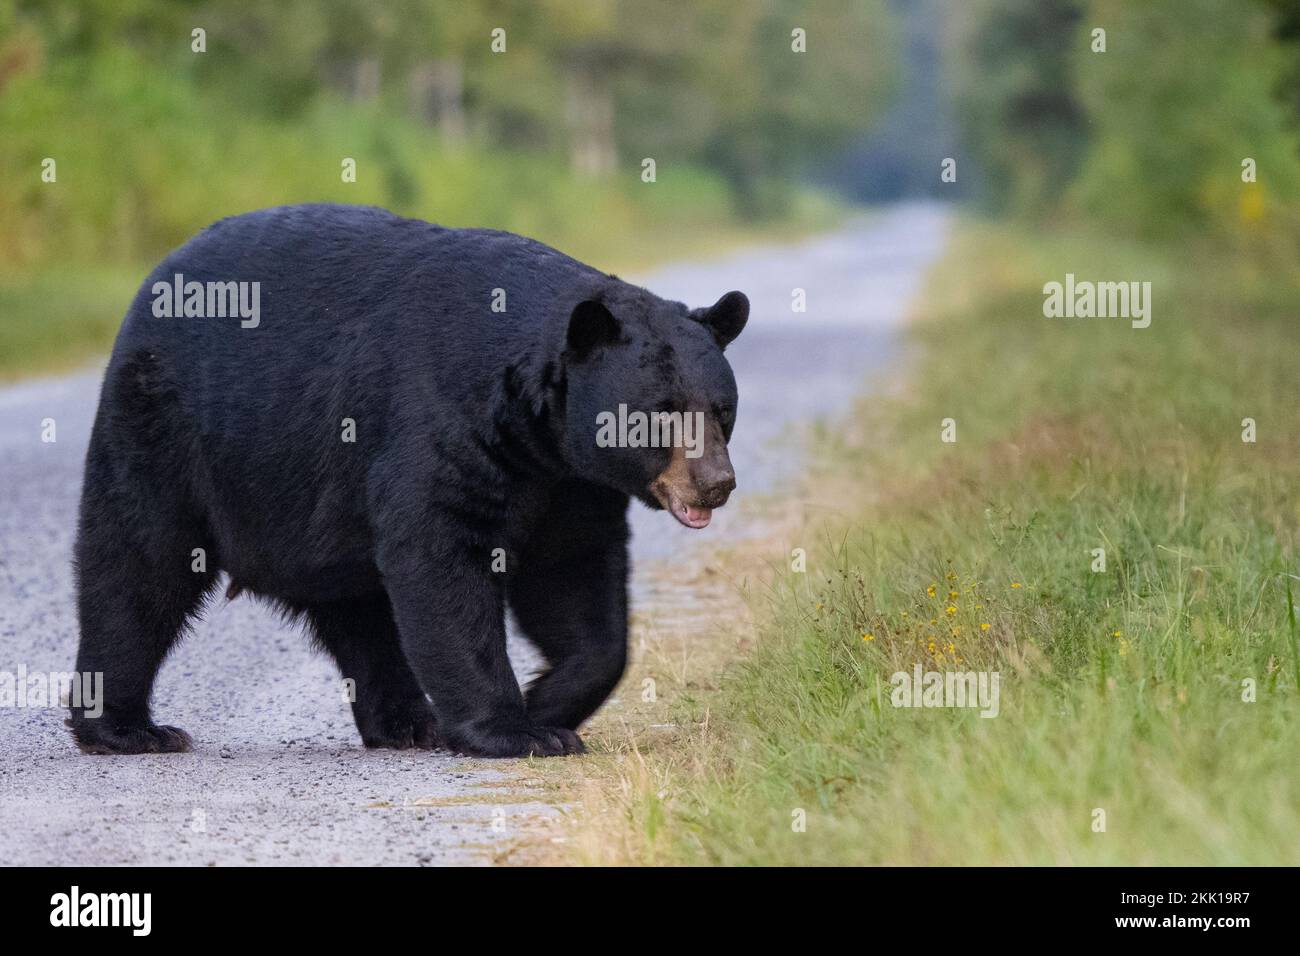 American Black Bear (Ursus americanus) attraversando la strada di ghiaia Foto Stock